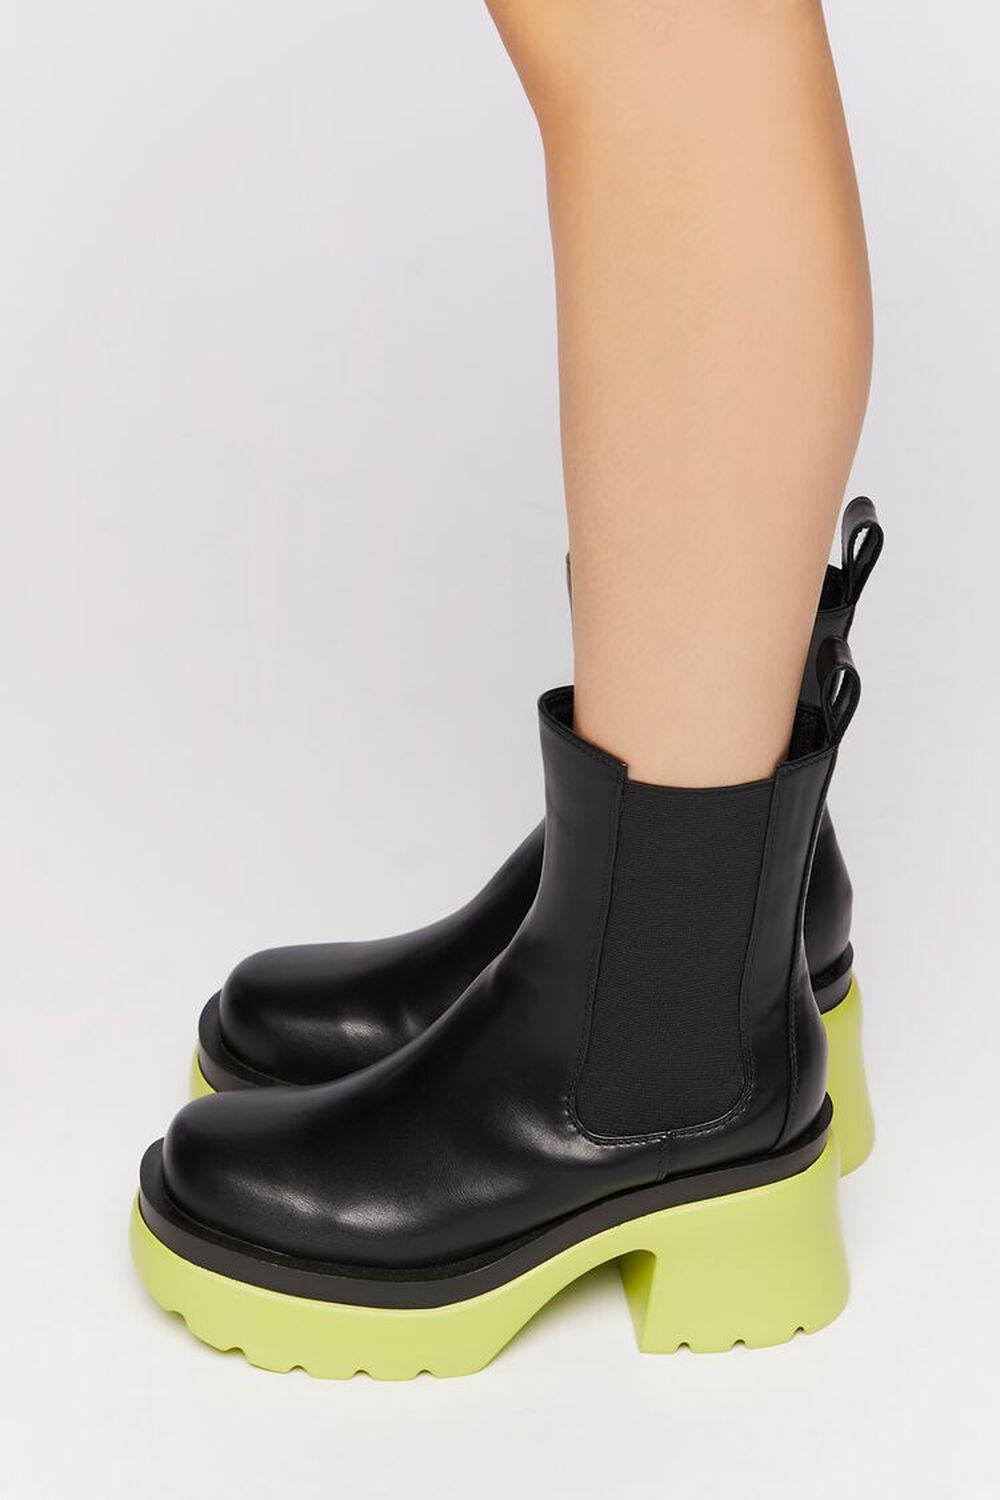 BLACK/LIME Lug-Sole Chelsea Boots, image 2